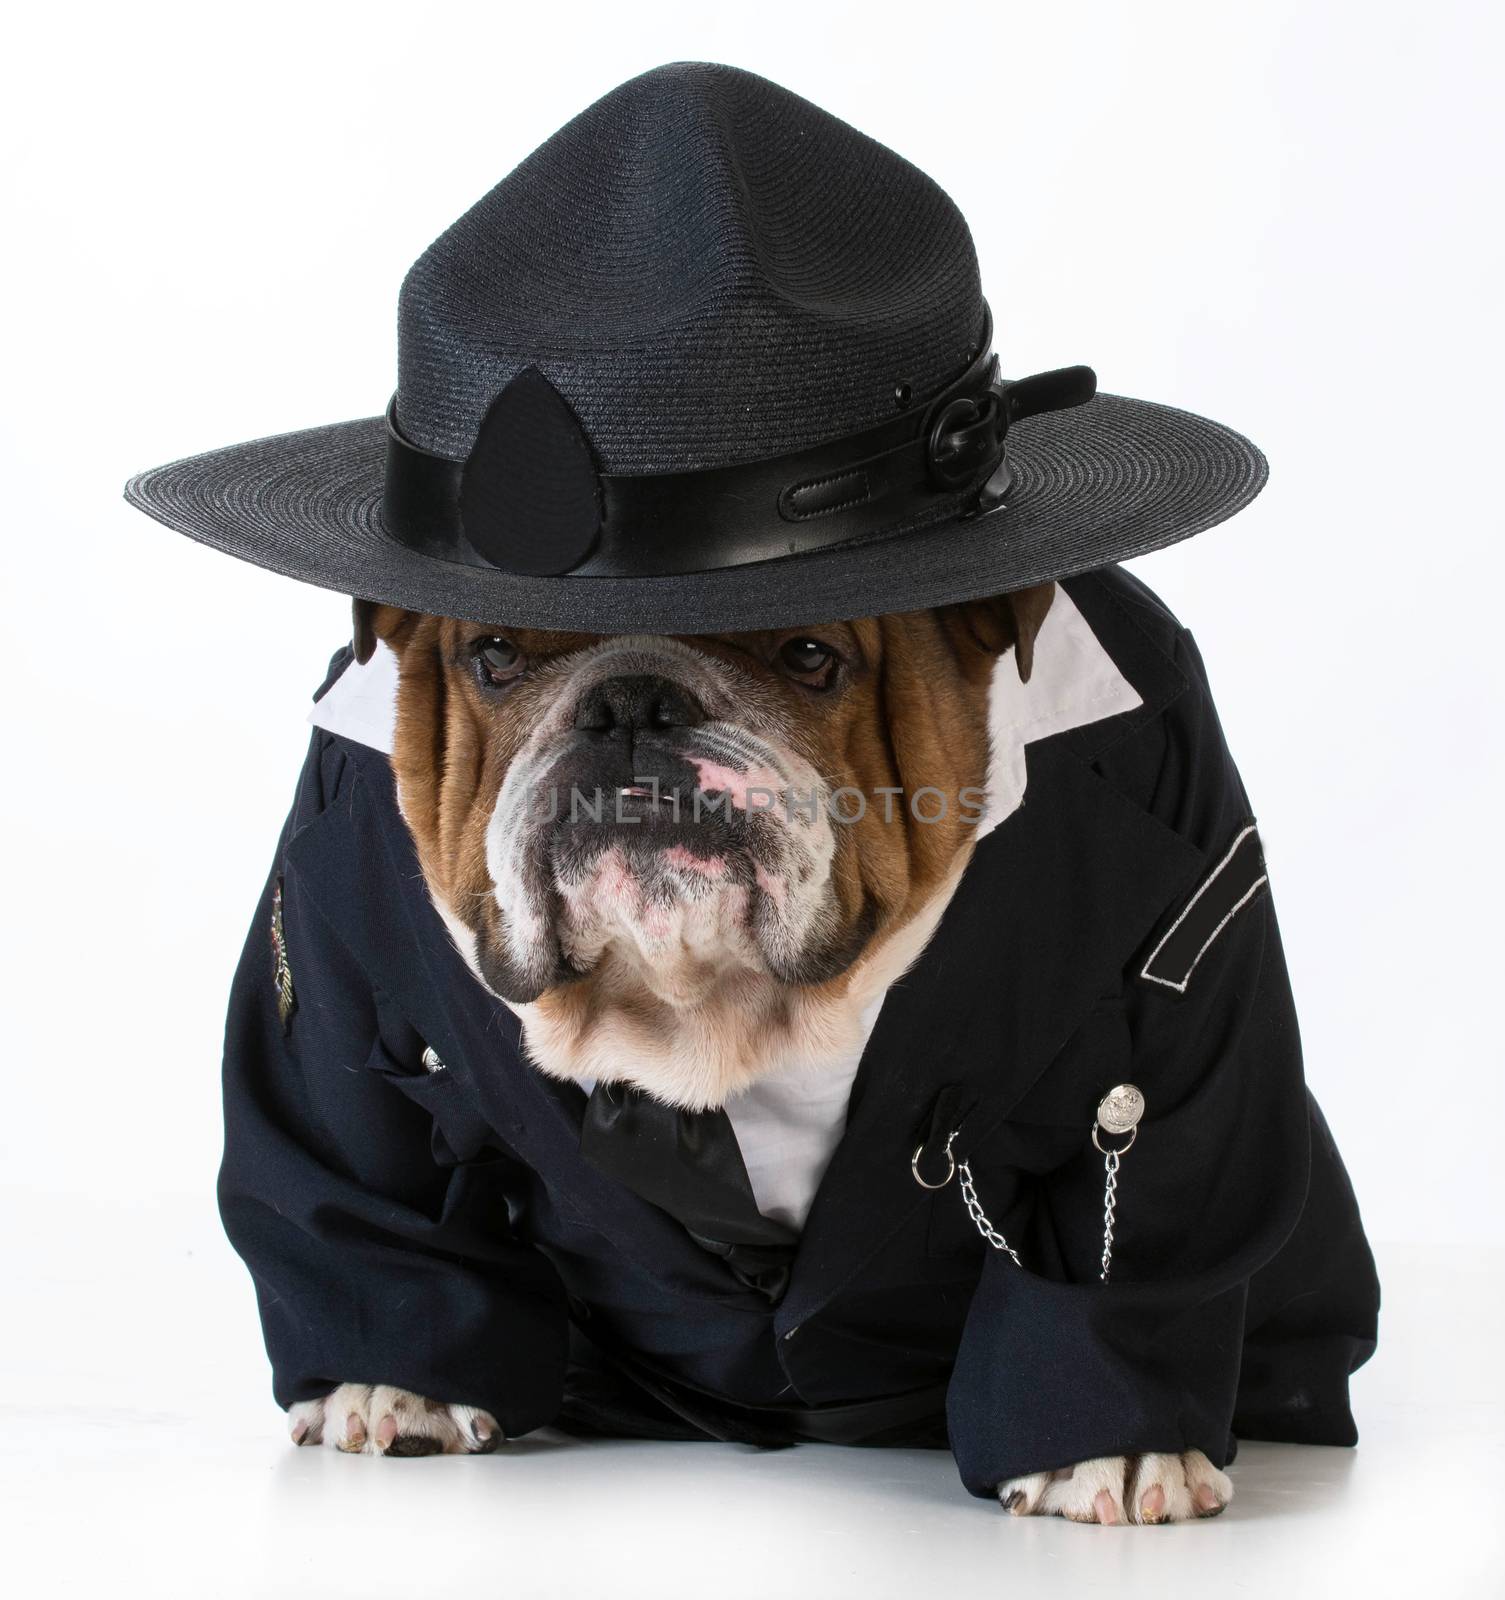 police officer or dog catcher - english bulldog wearing costume on white background